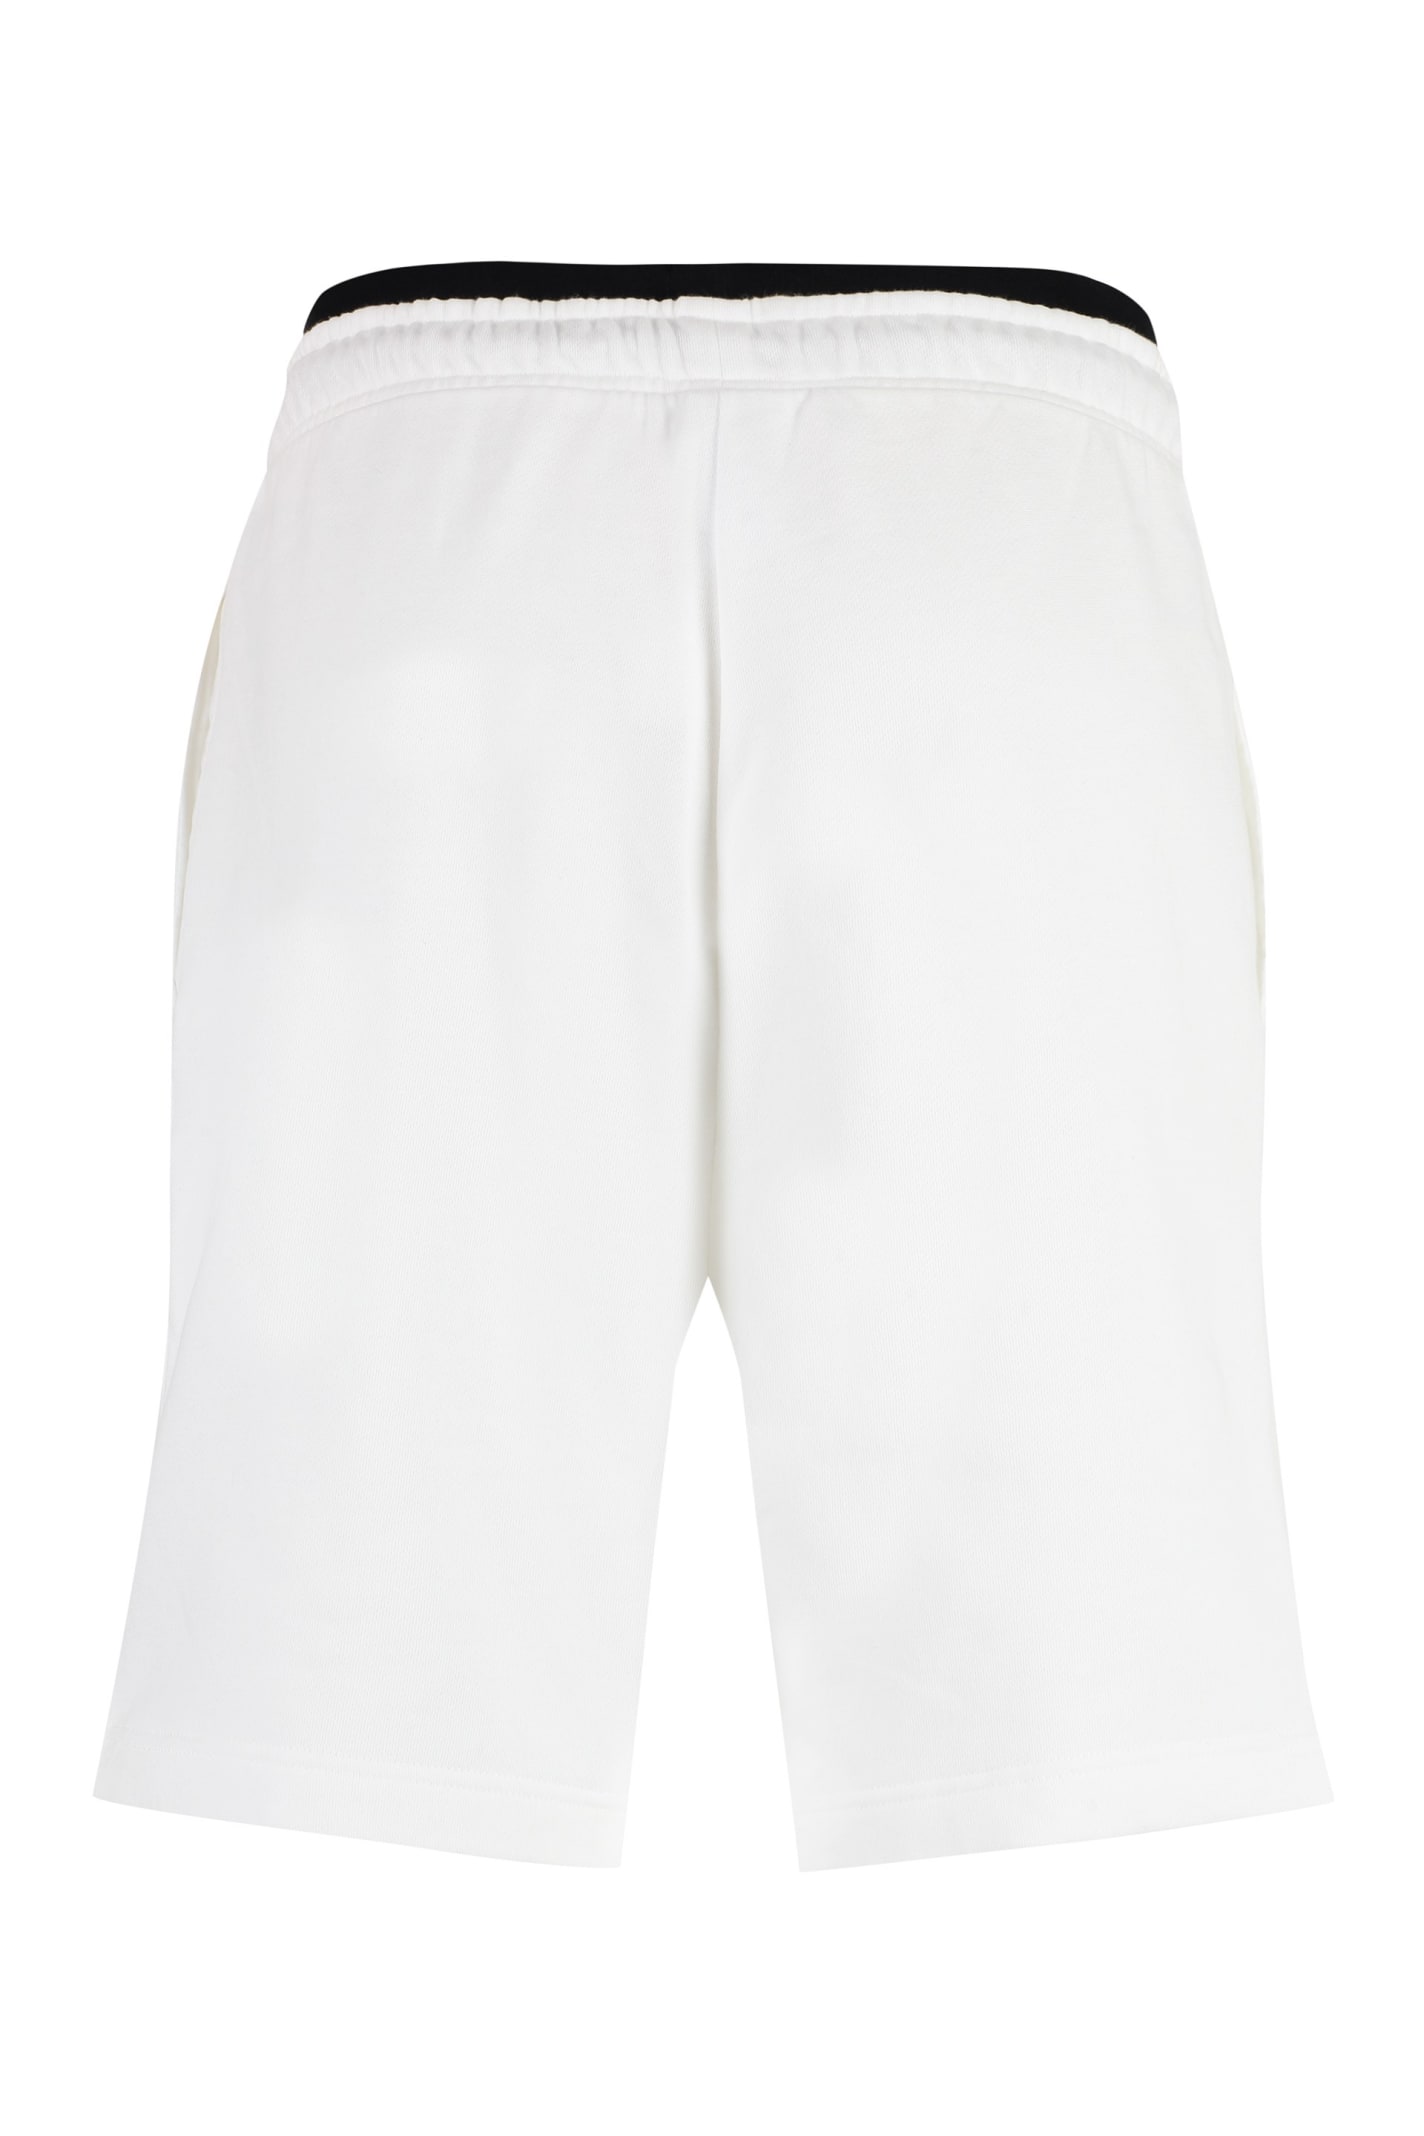 Shop Hugo Boss Fleece Shorts In White